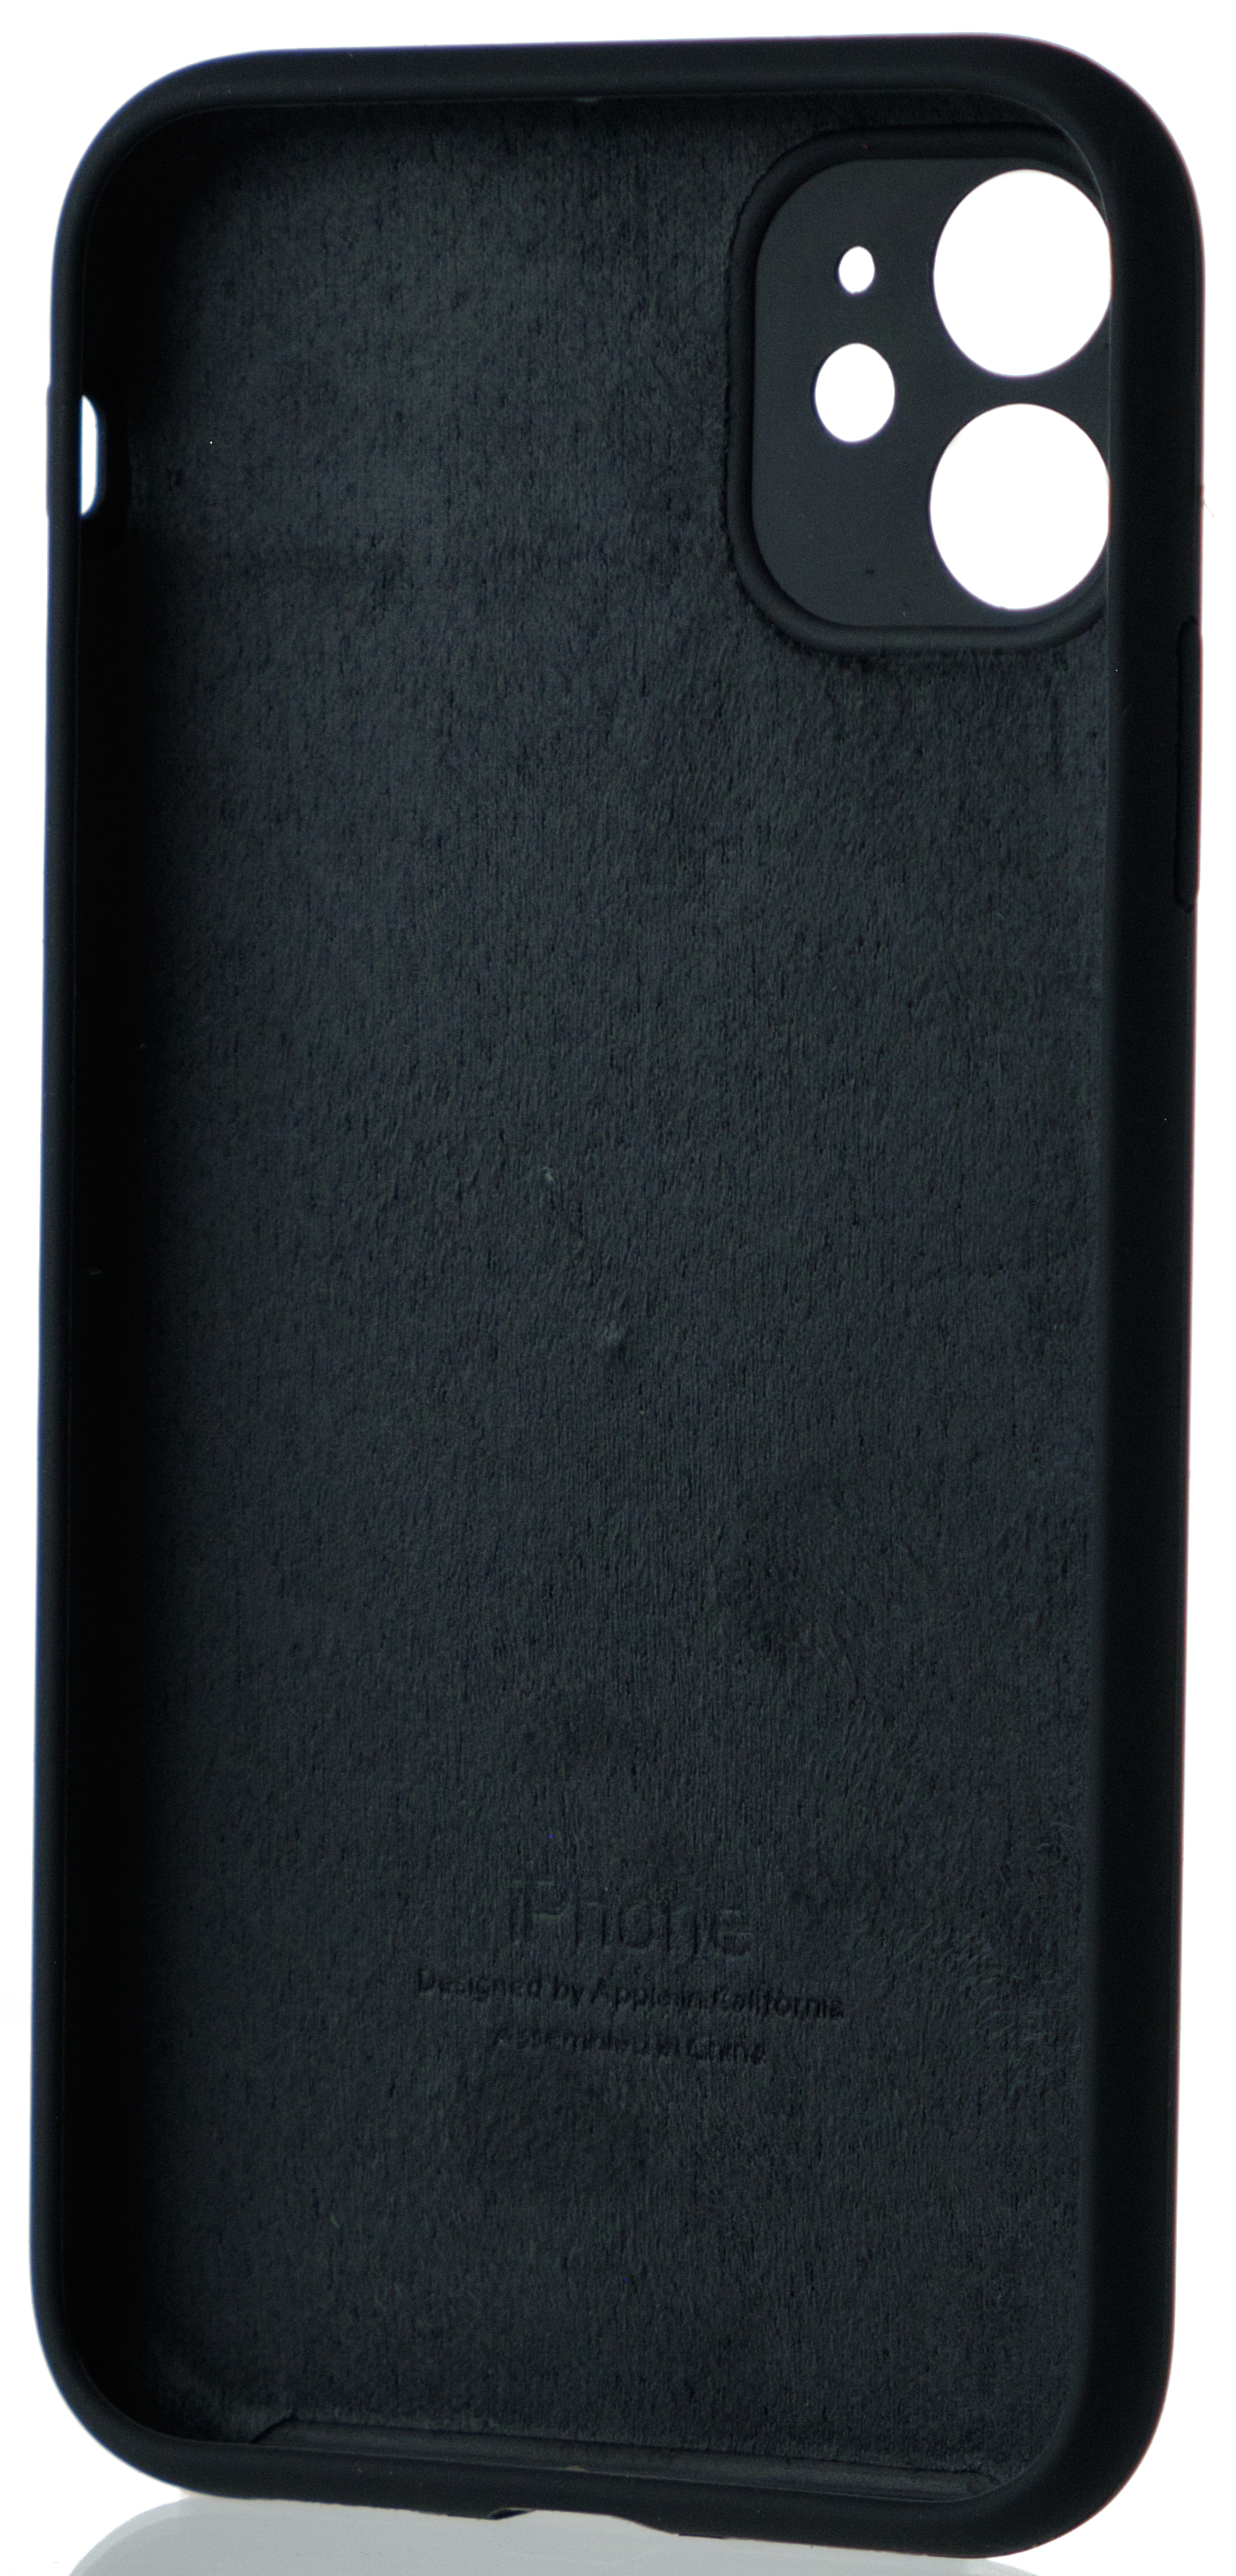 Чехол Silicone Case полная защита для iPhone 11 темно-серый